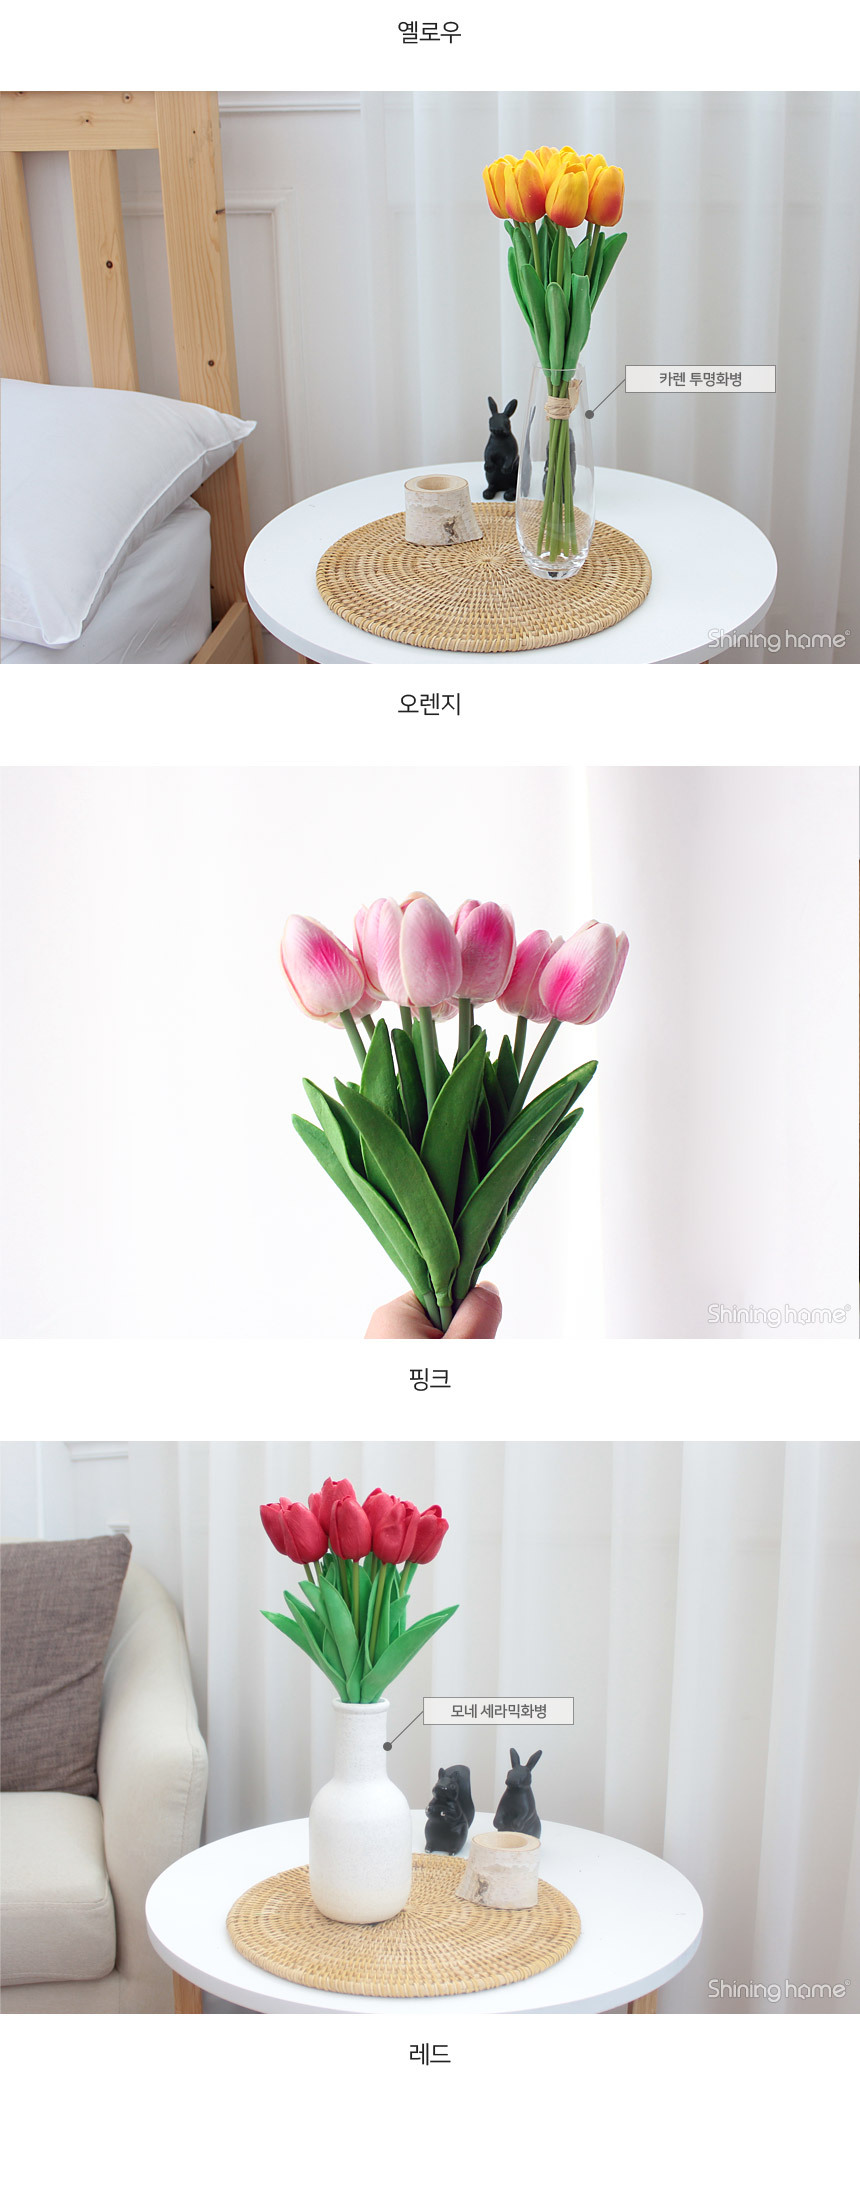 inus_flower_tulip_04.jpg